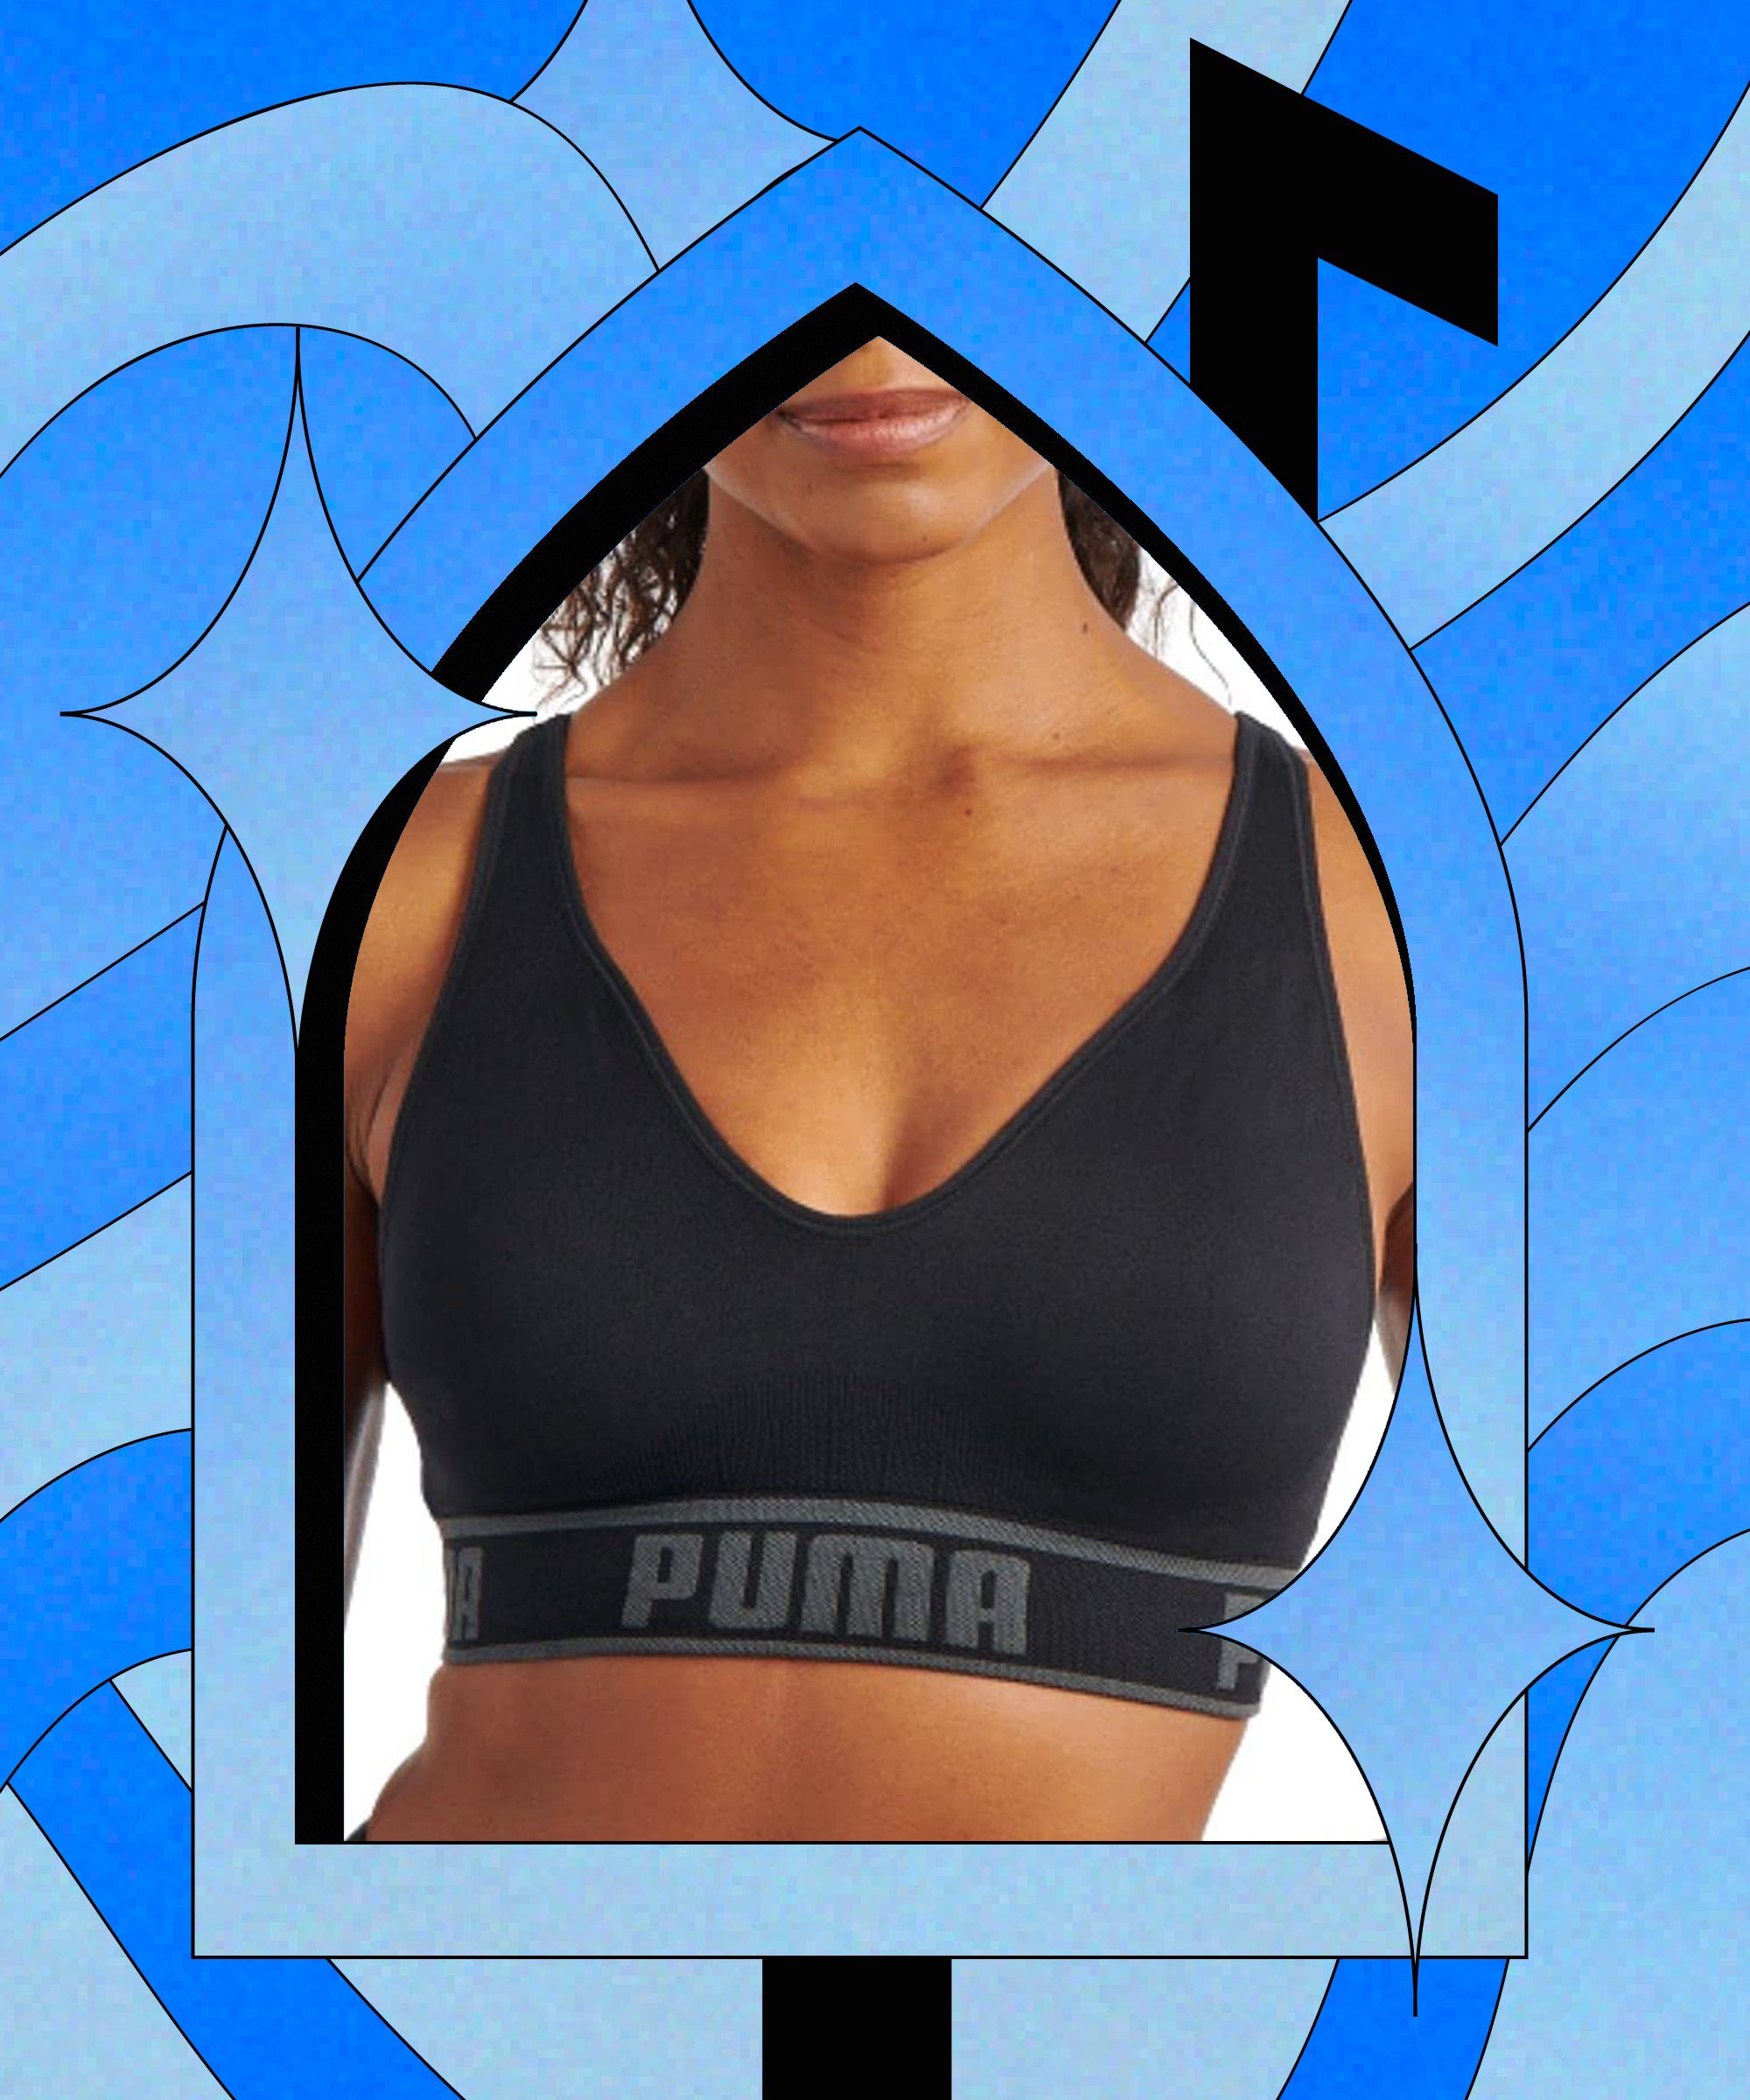 Women’s Puma 3 Pack of Sports Bras NWT